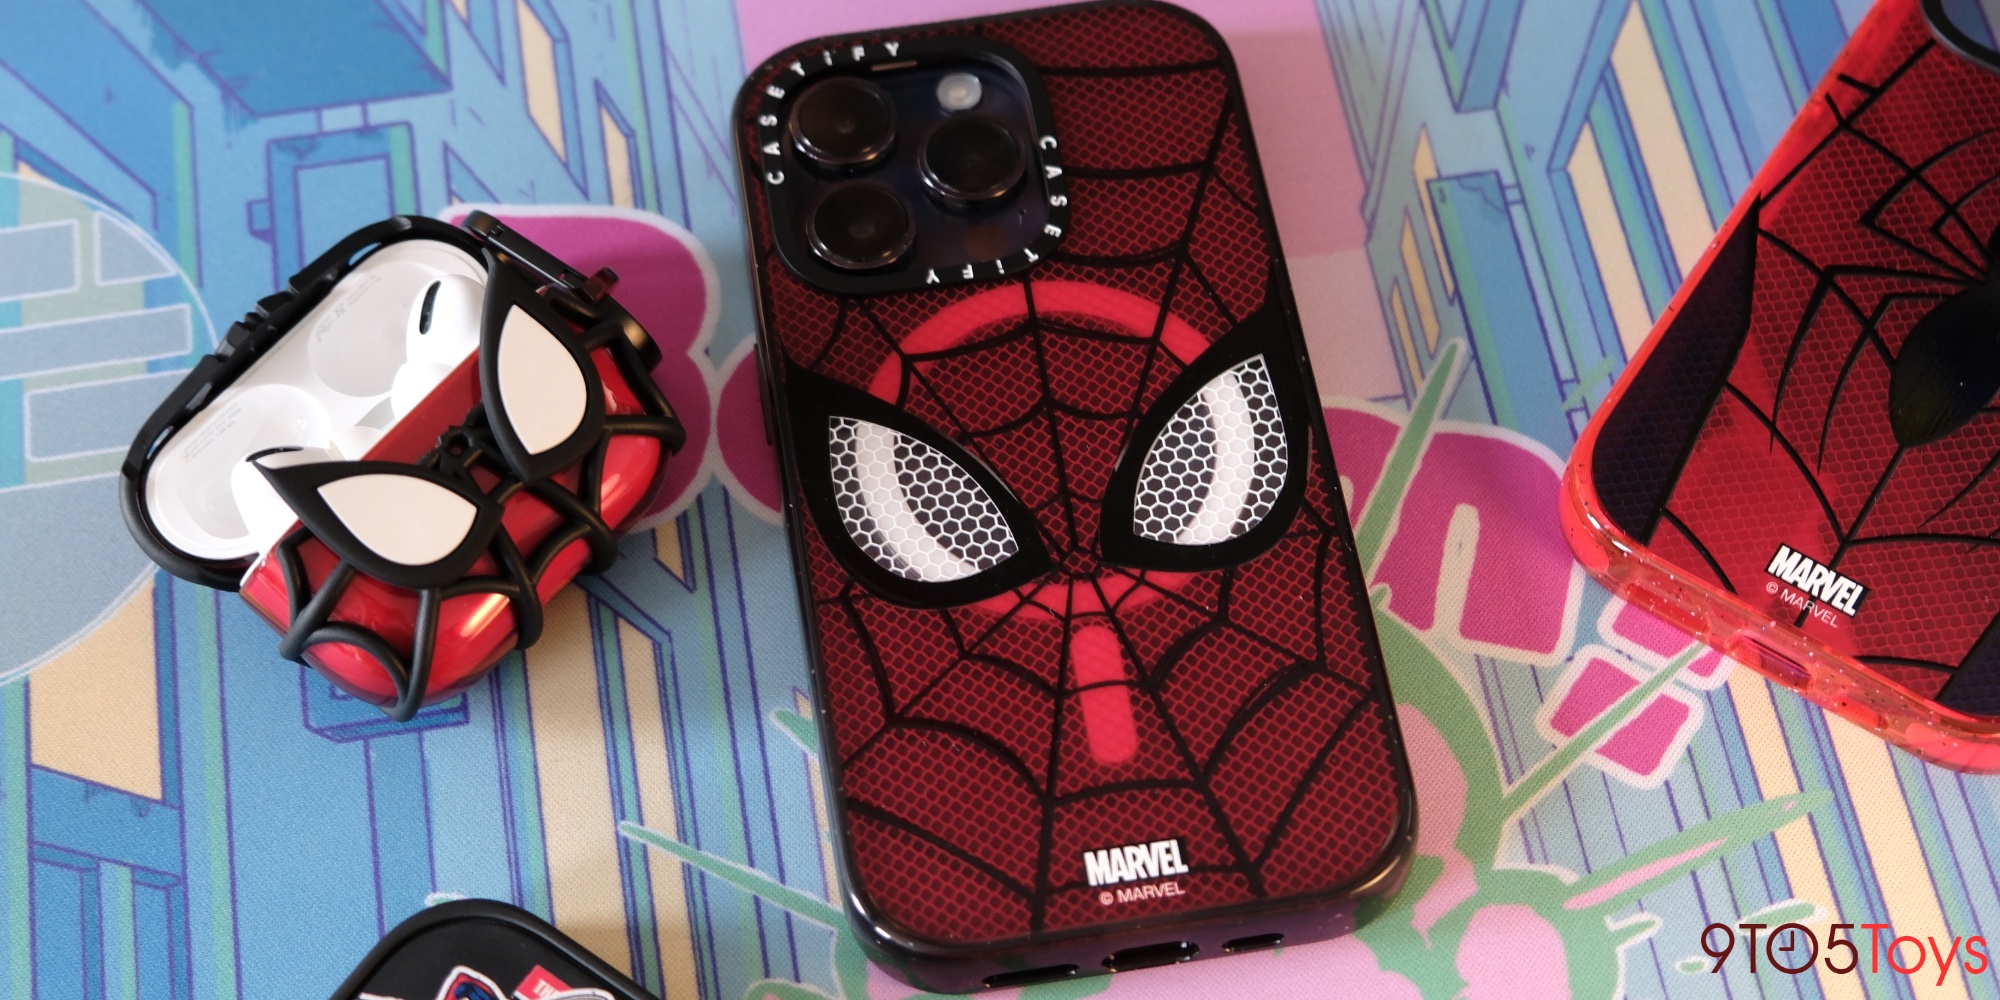 Marvel Spider-Man Hero Mask Assortment - Shop Dress Up & Pretend Play at  H-E-B